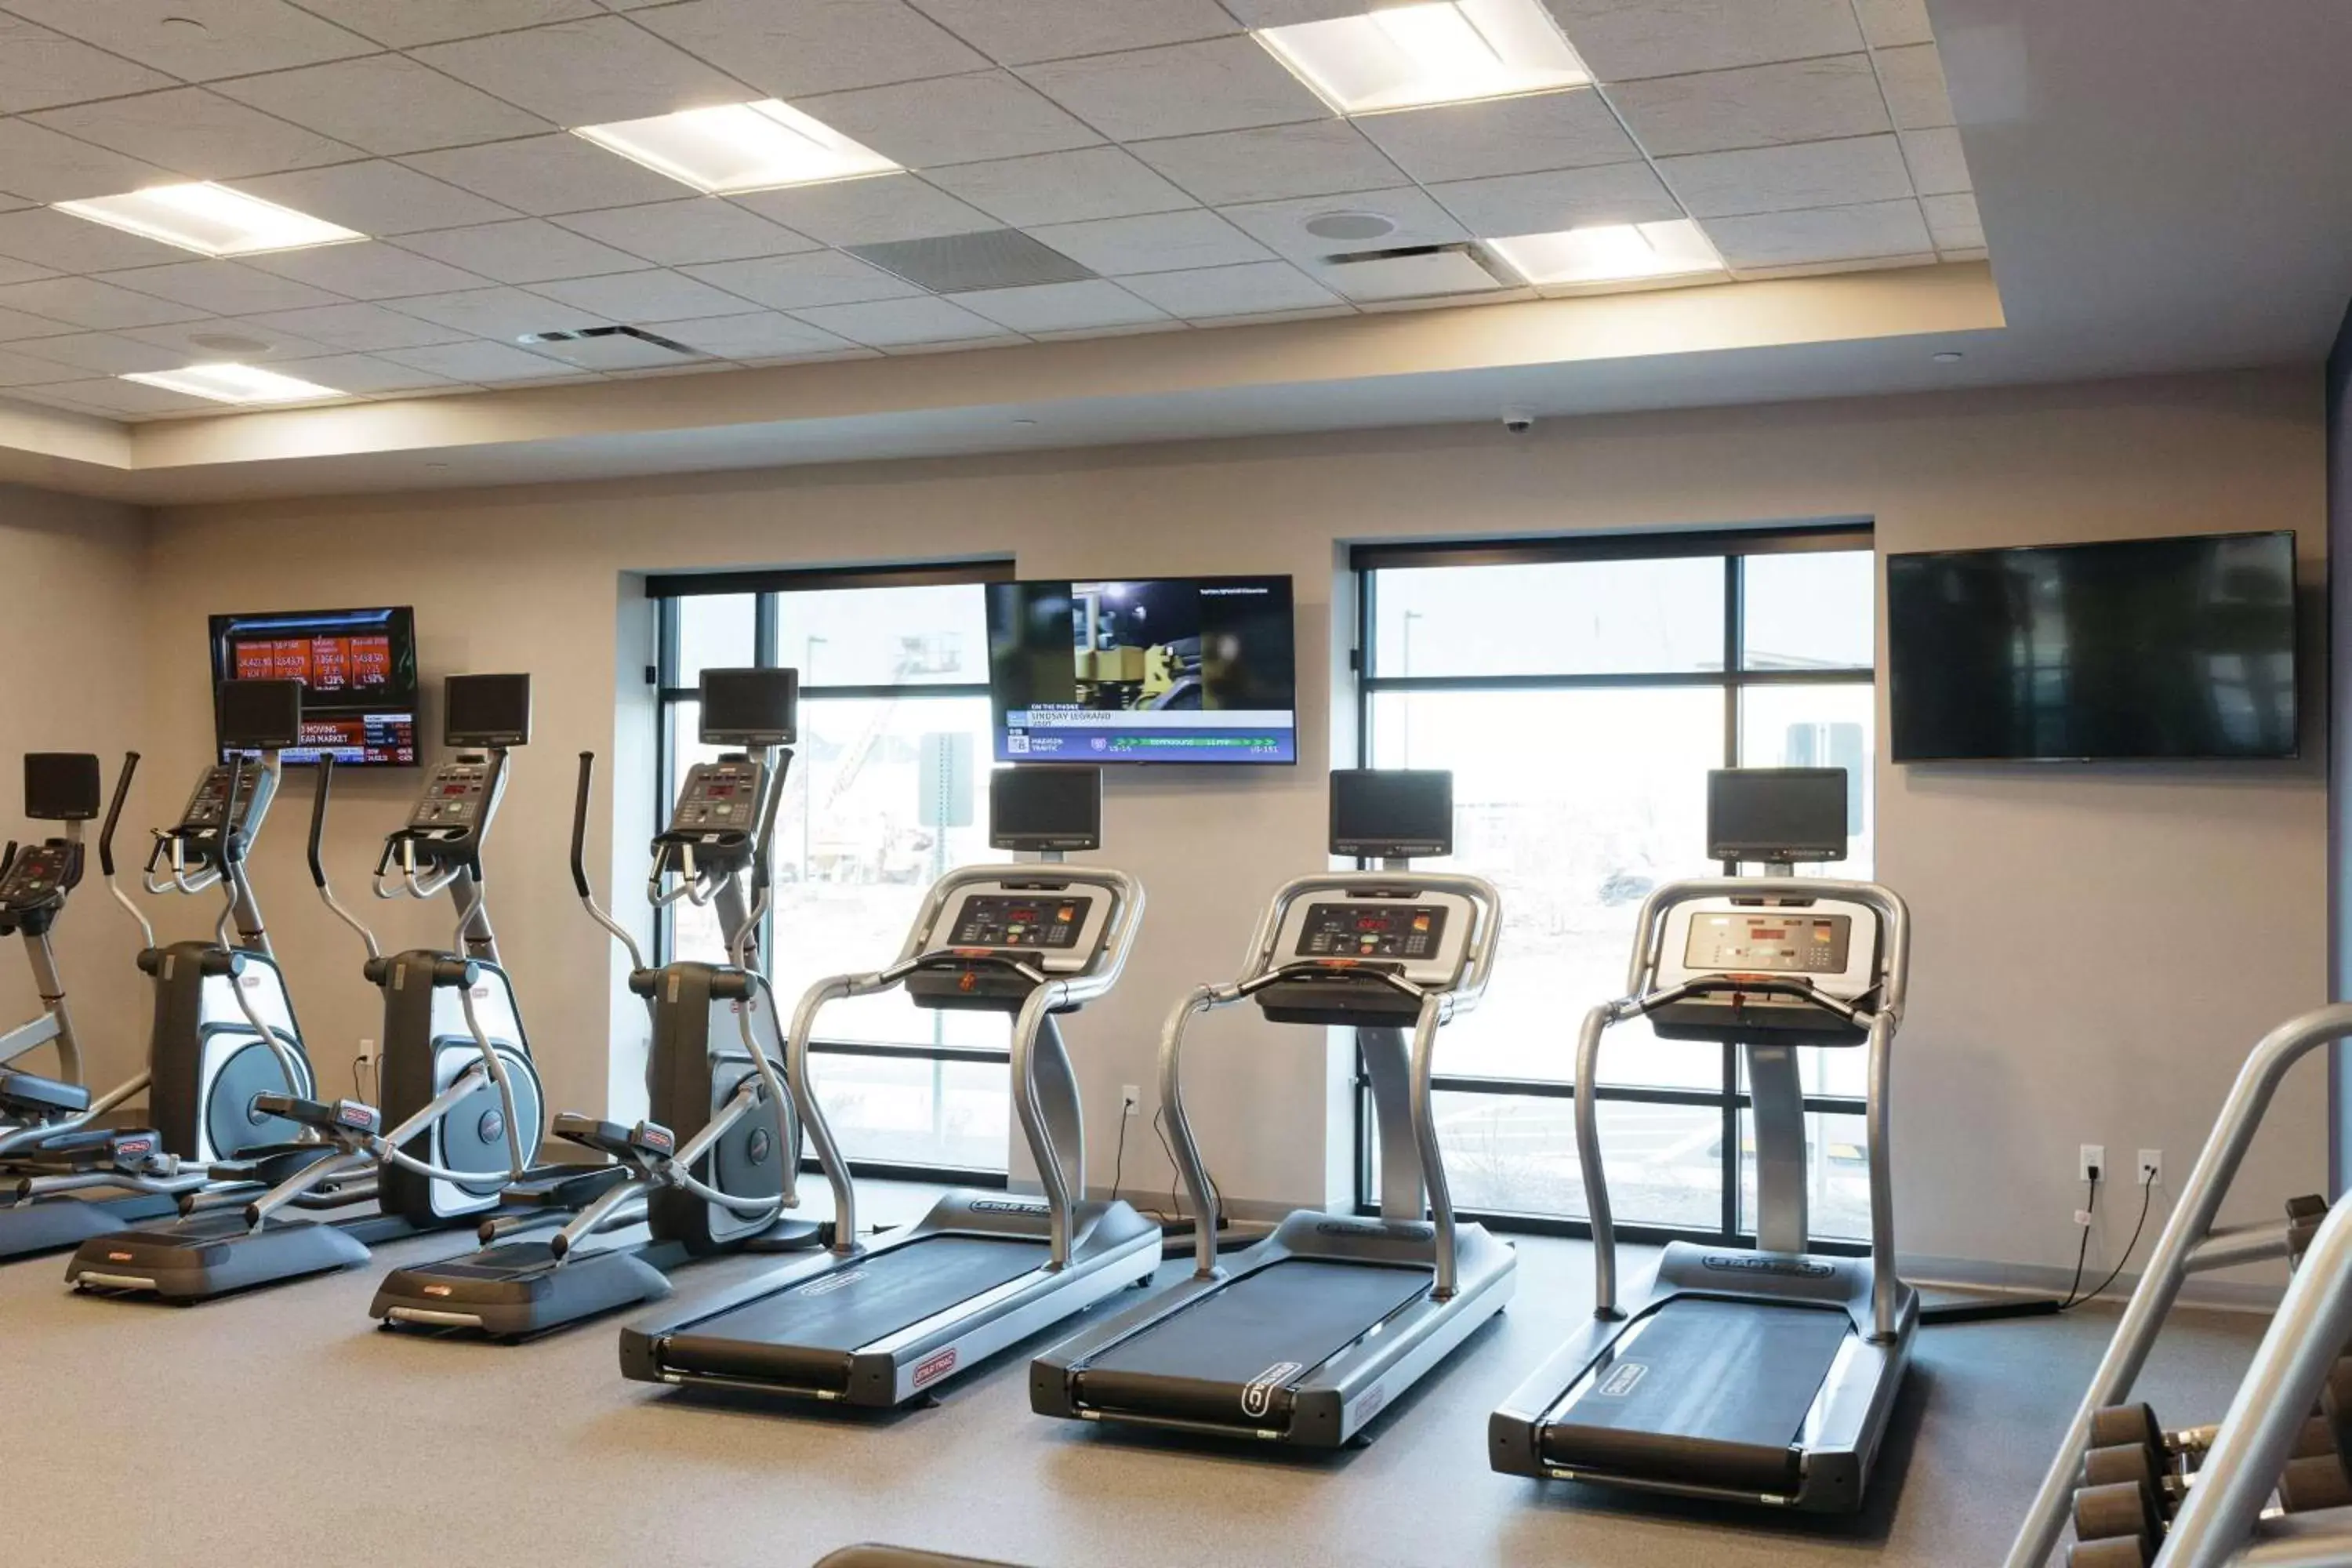 Fitness centre/facilities, Fitness Center/Facilities in Hilton Garden Inn Madison Sun Prairie